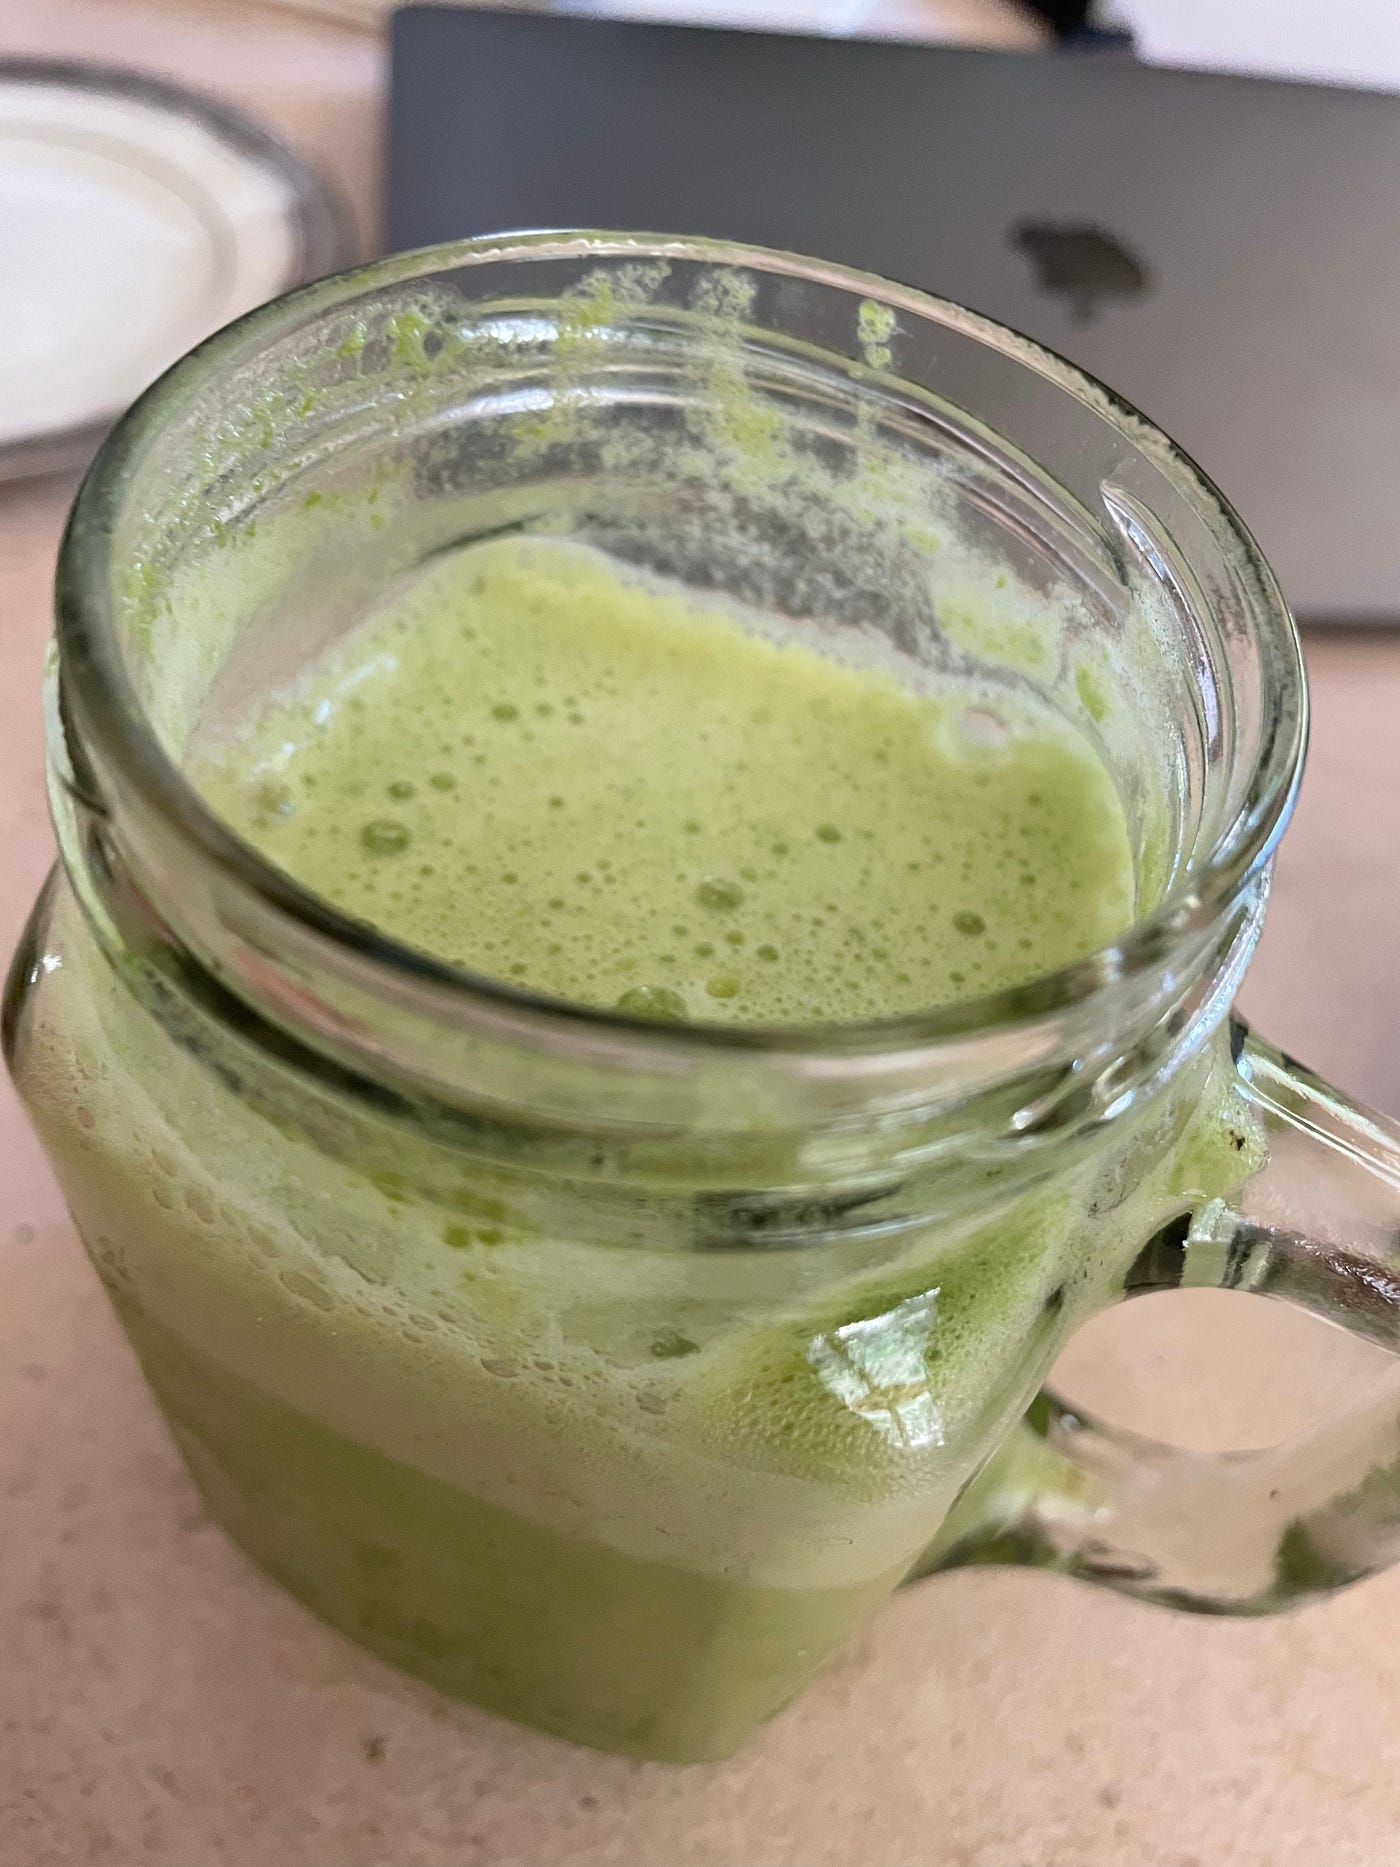 Green lemonaide in a masion jar glass.